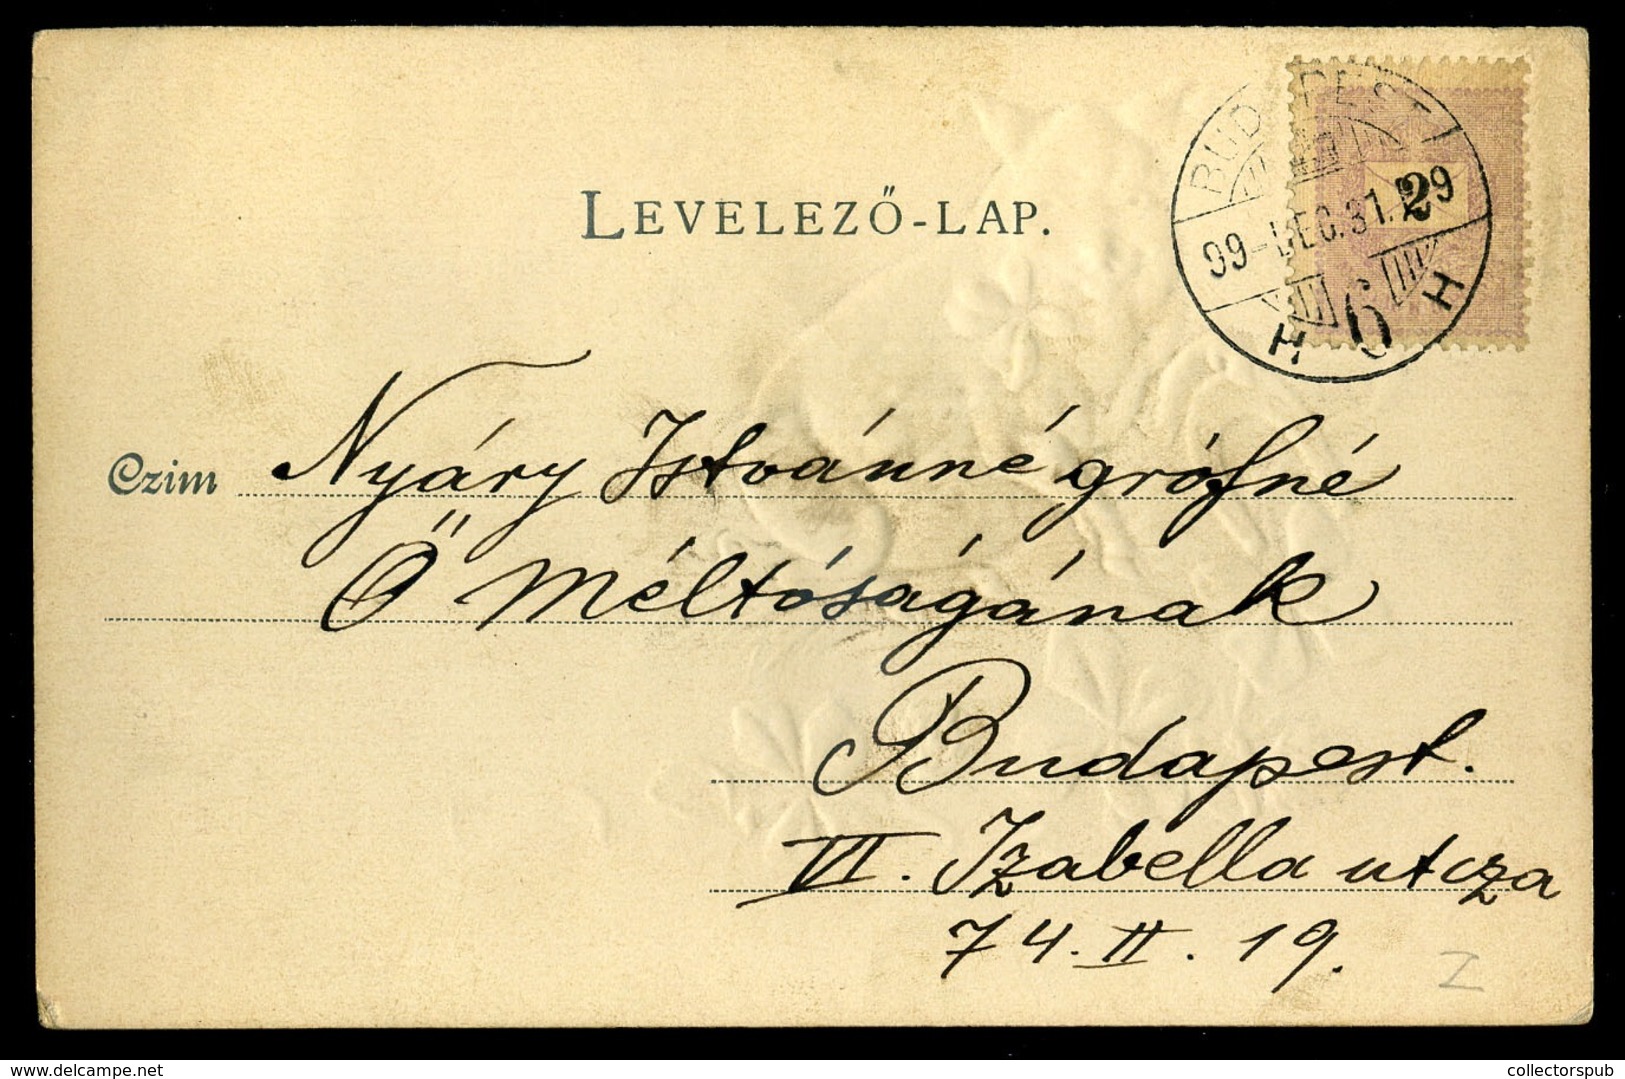 1899.12.31! Malacos, Dombor Képeslap - Hungary